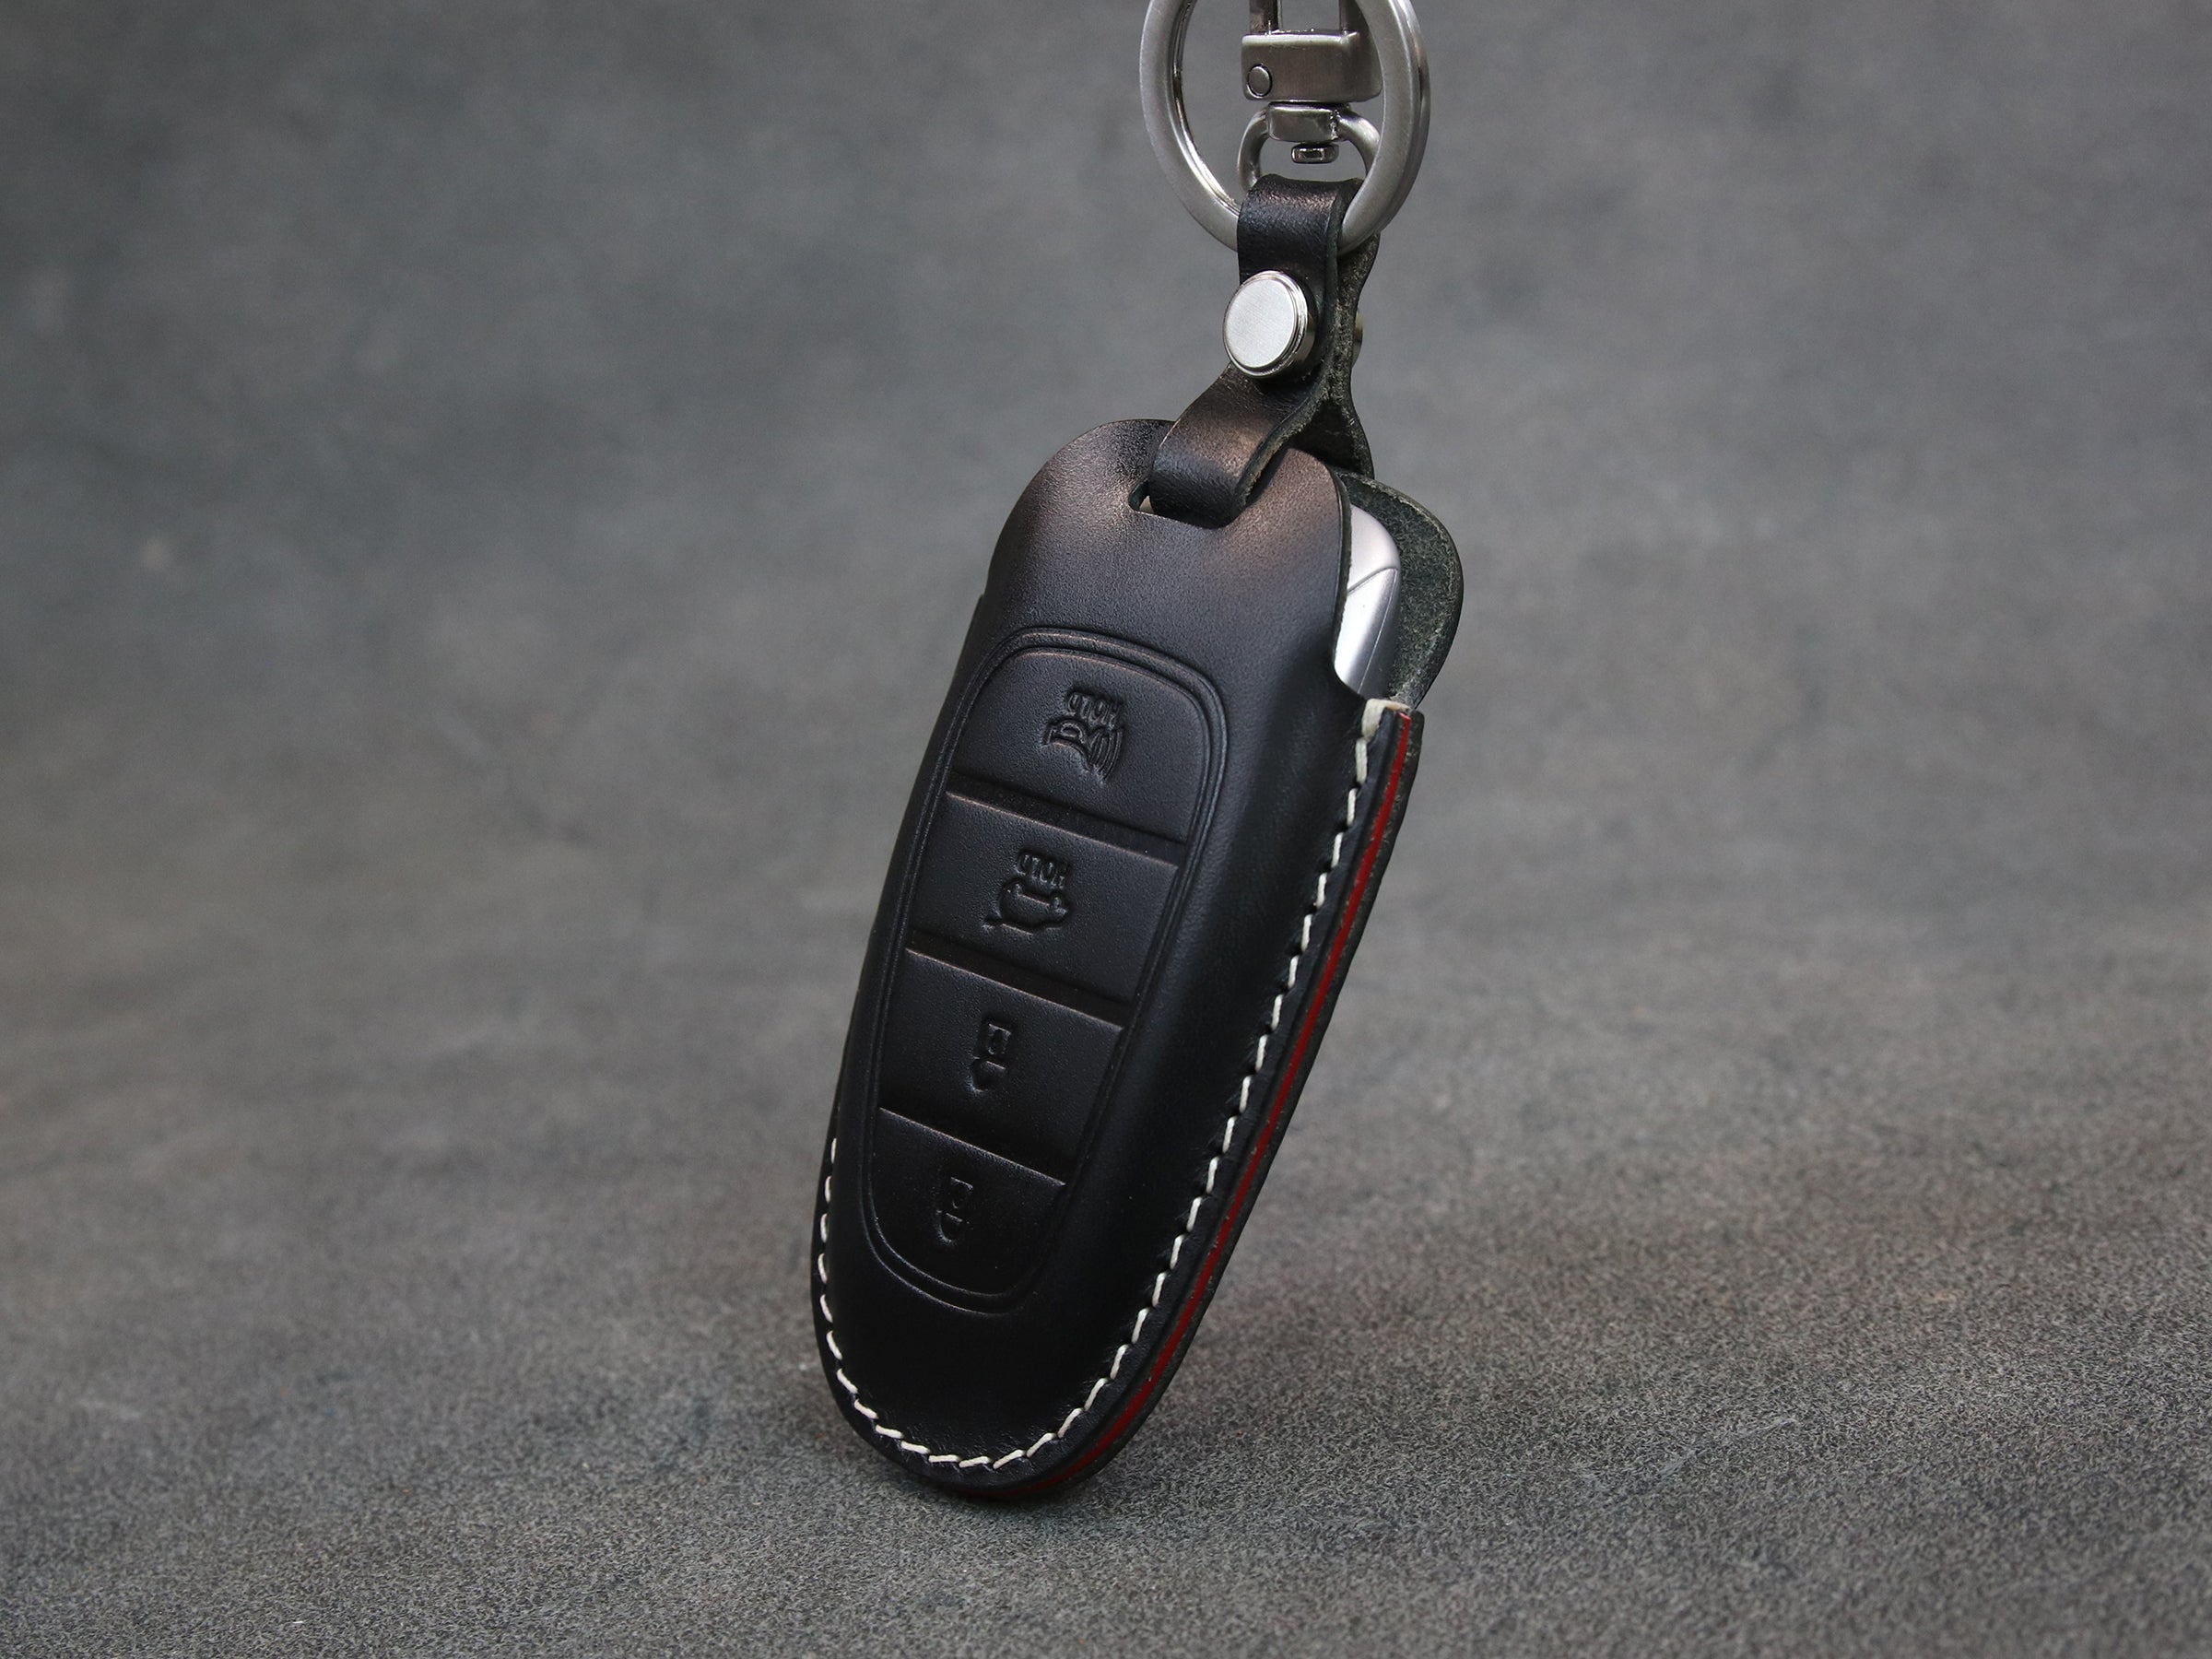 HYUNDAI Santa Fe 2013 2015 I10 I30 Leather Key Fob Cover Case for Hyundai  Solaris Accent Ix25 Creta Elantra Ix35 Tucson Verna Sonata Luxury 